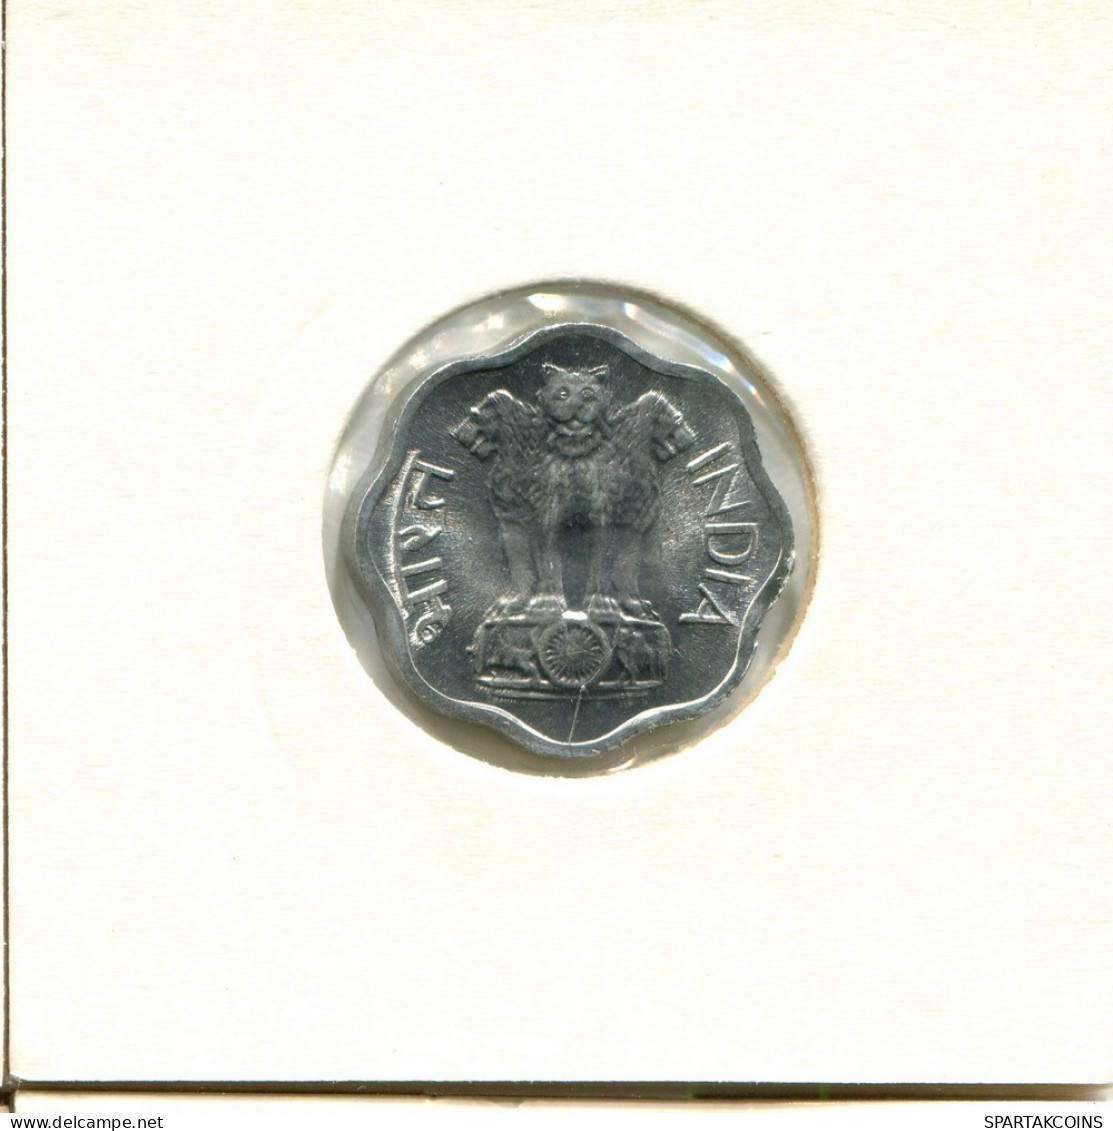 2 PAISE 1977 INDIA Coin #AY721.U.A - Inde